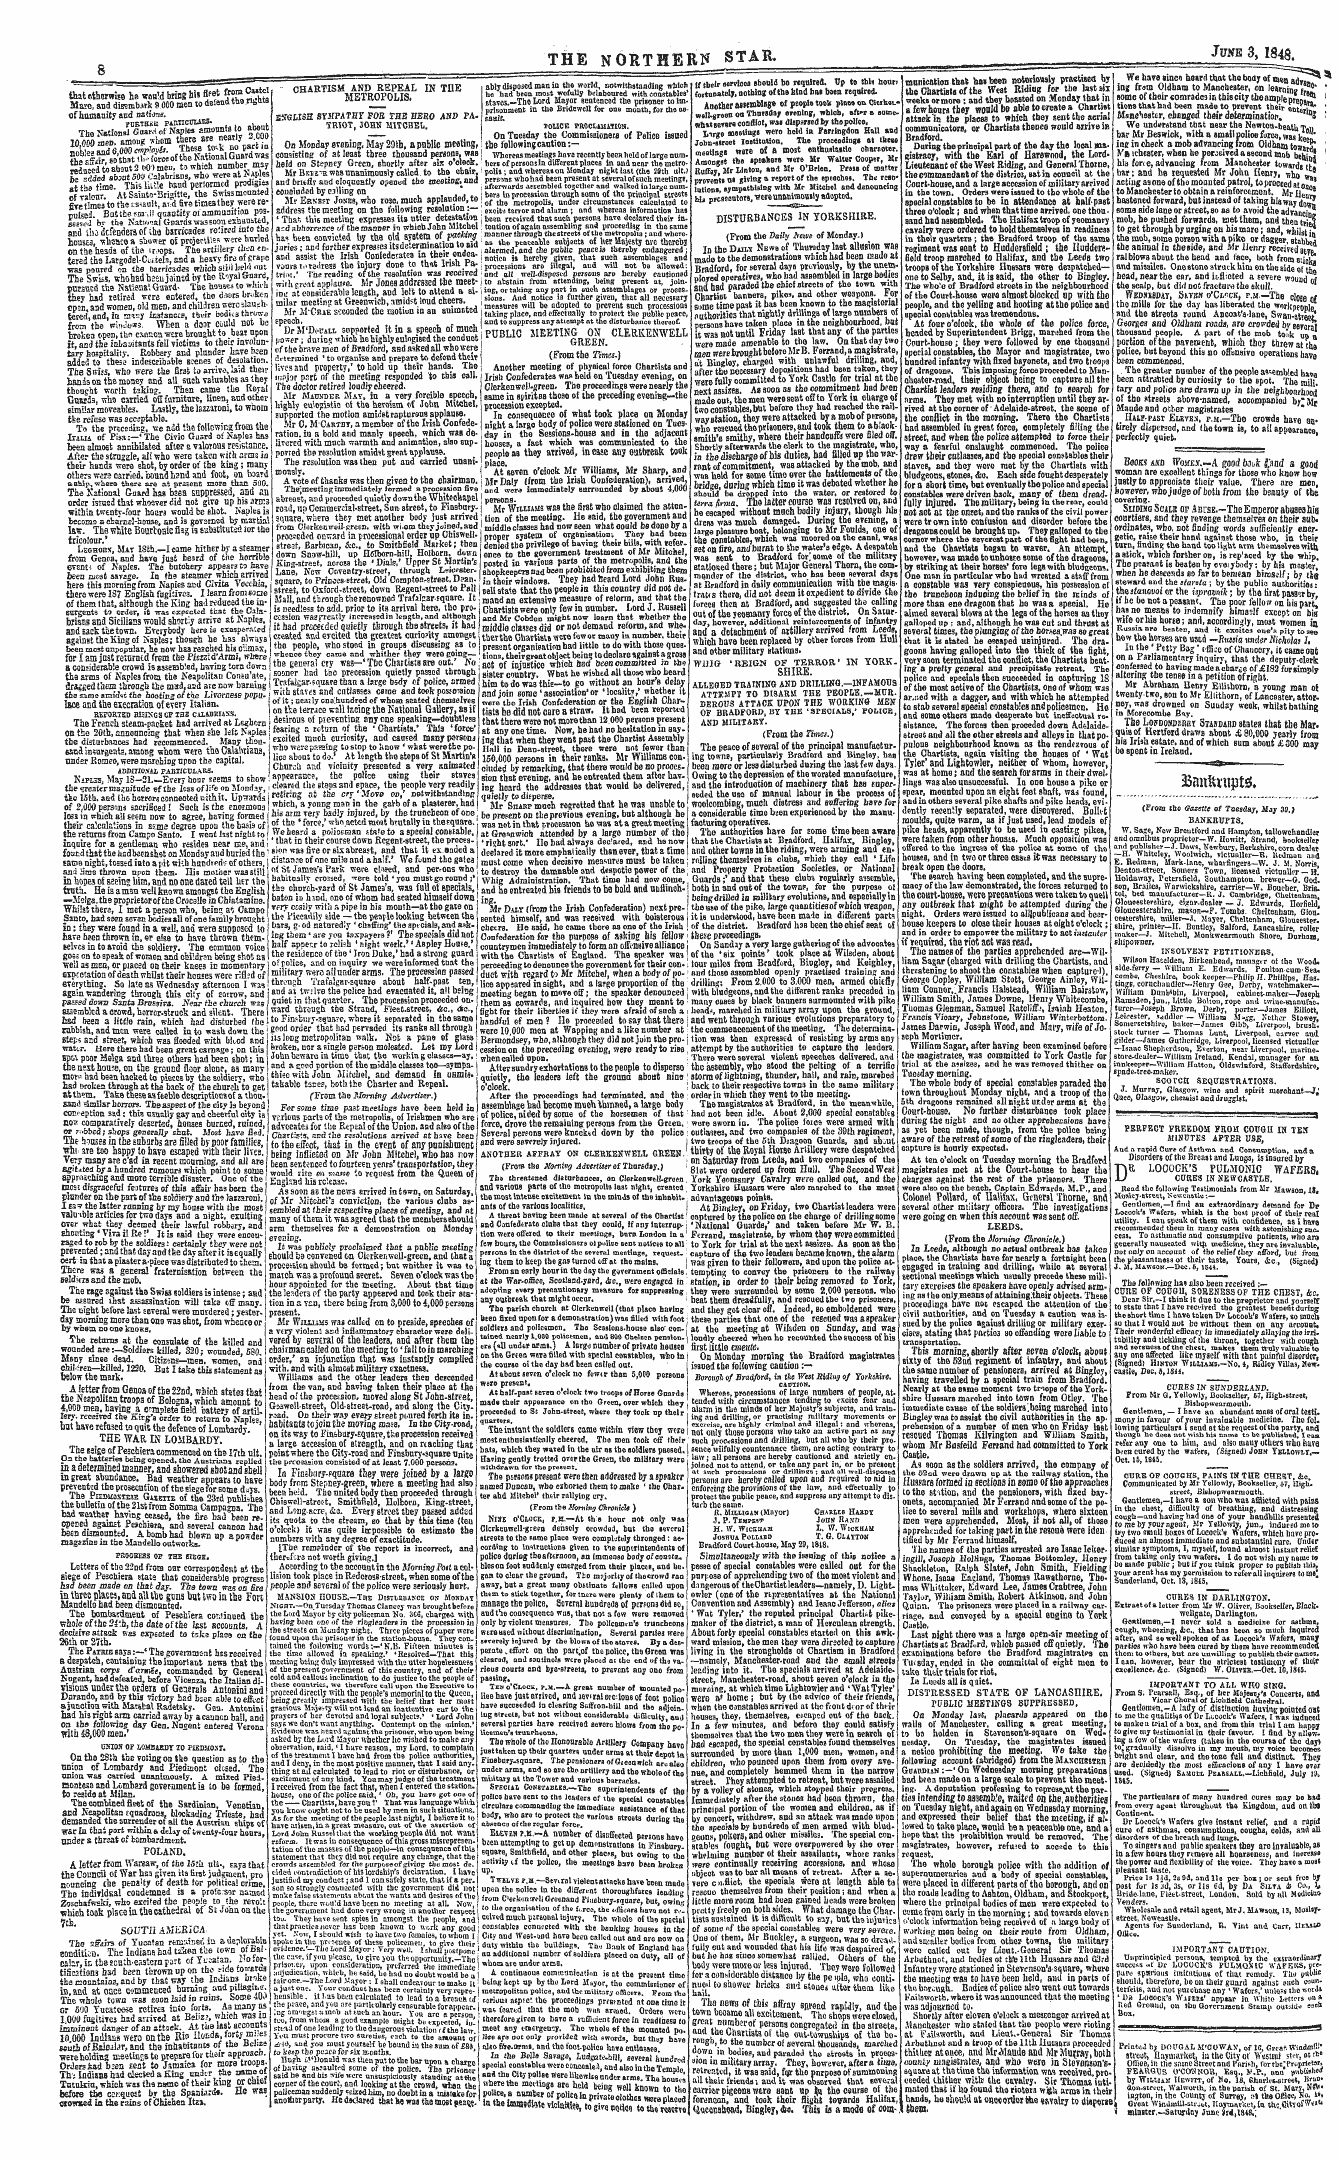 Northern Star (1837-1852): jS F Y, 3rd edition - Banftrupt**